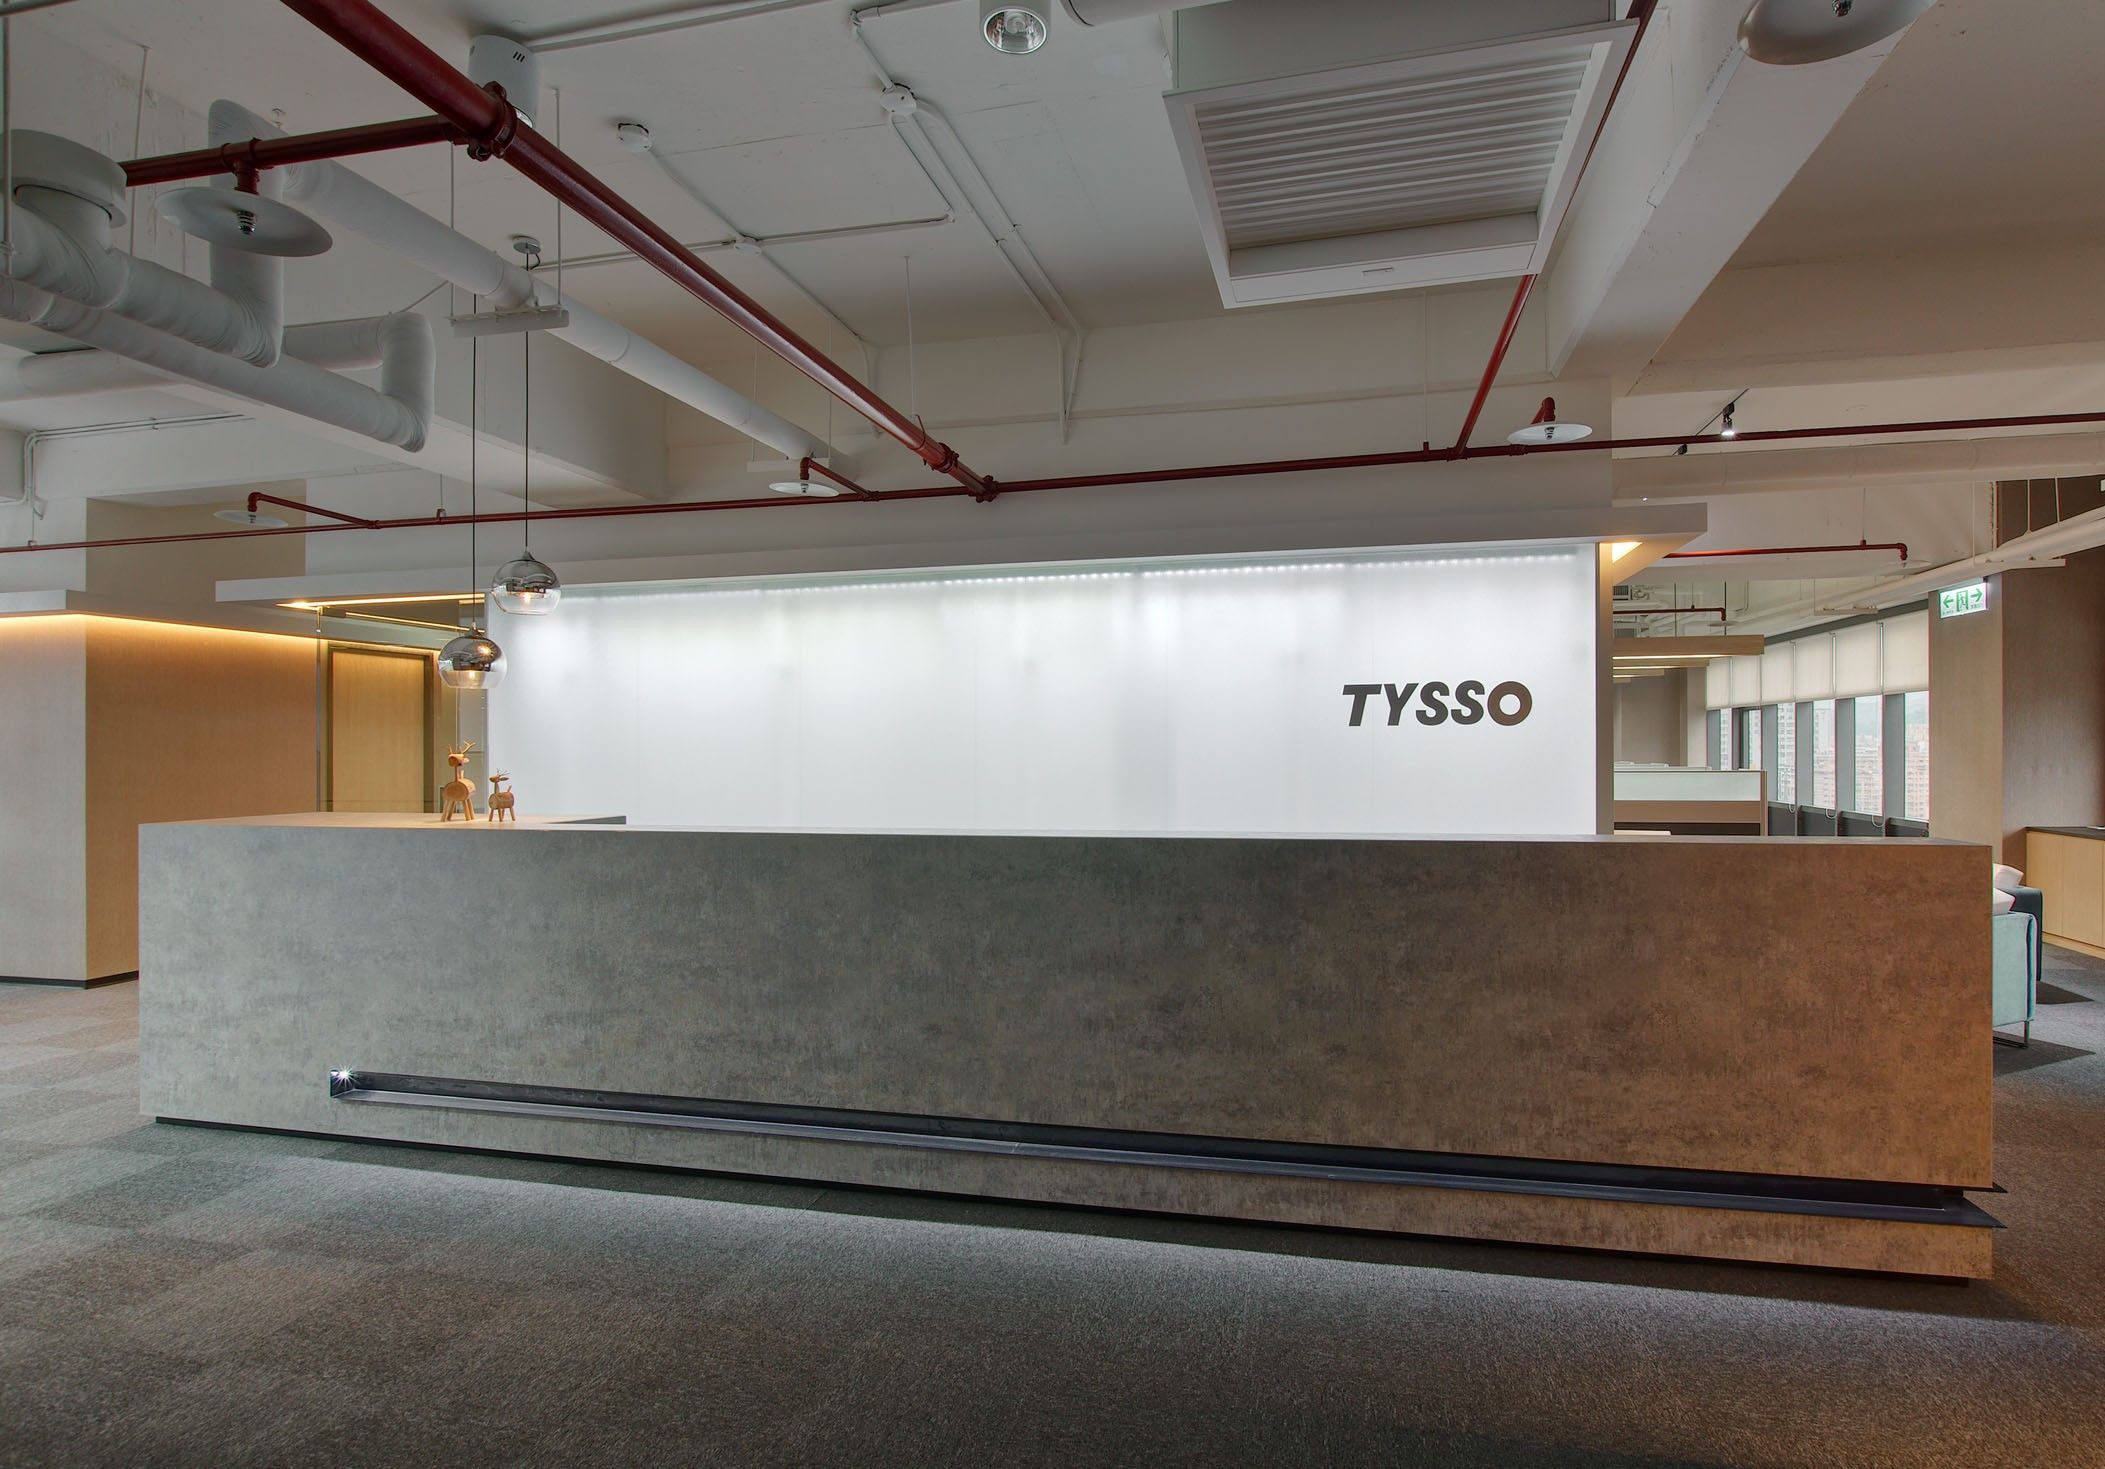 Headquarter of Fametech (TYSSO), New Taipei City, Taiwan.